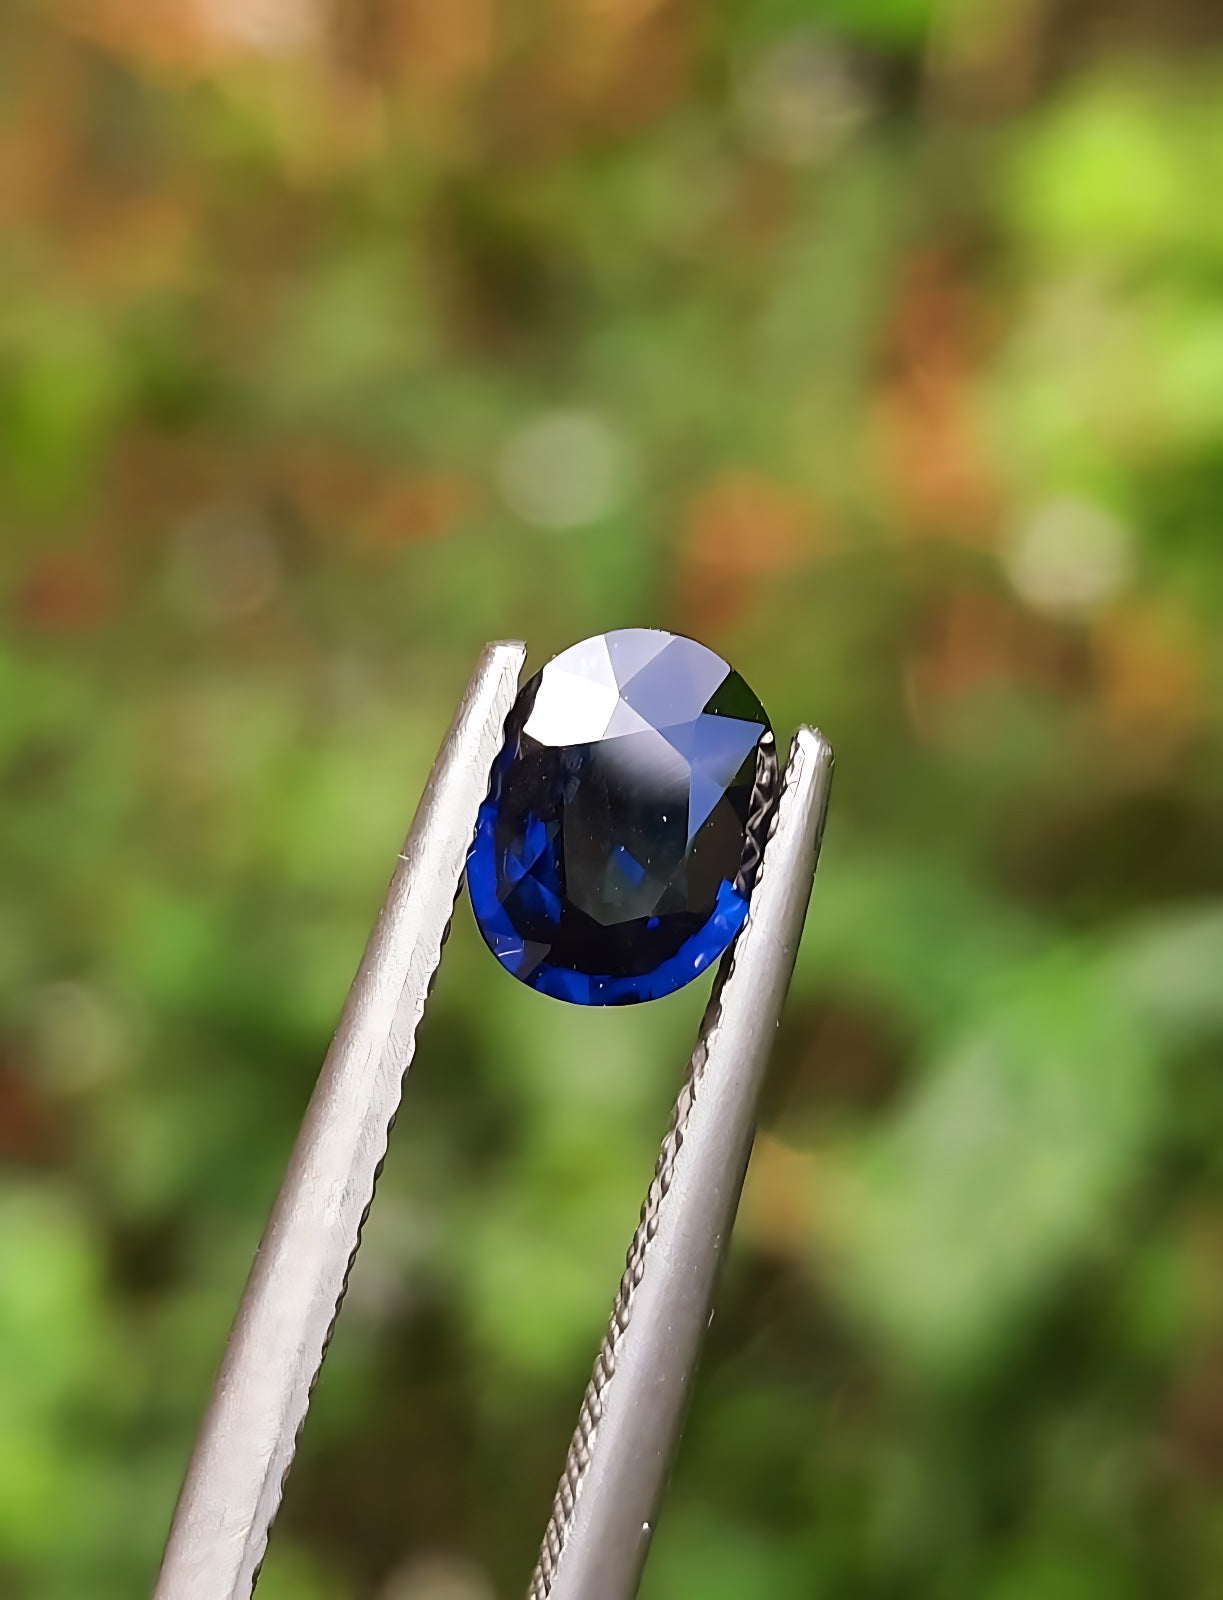 Handmade gold or platina ring 1.14 ct. natural Royal blue Sapphire & natural Vvs1 high quality Diamonds.